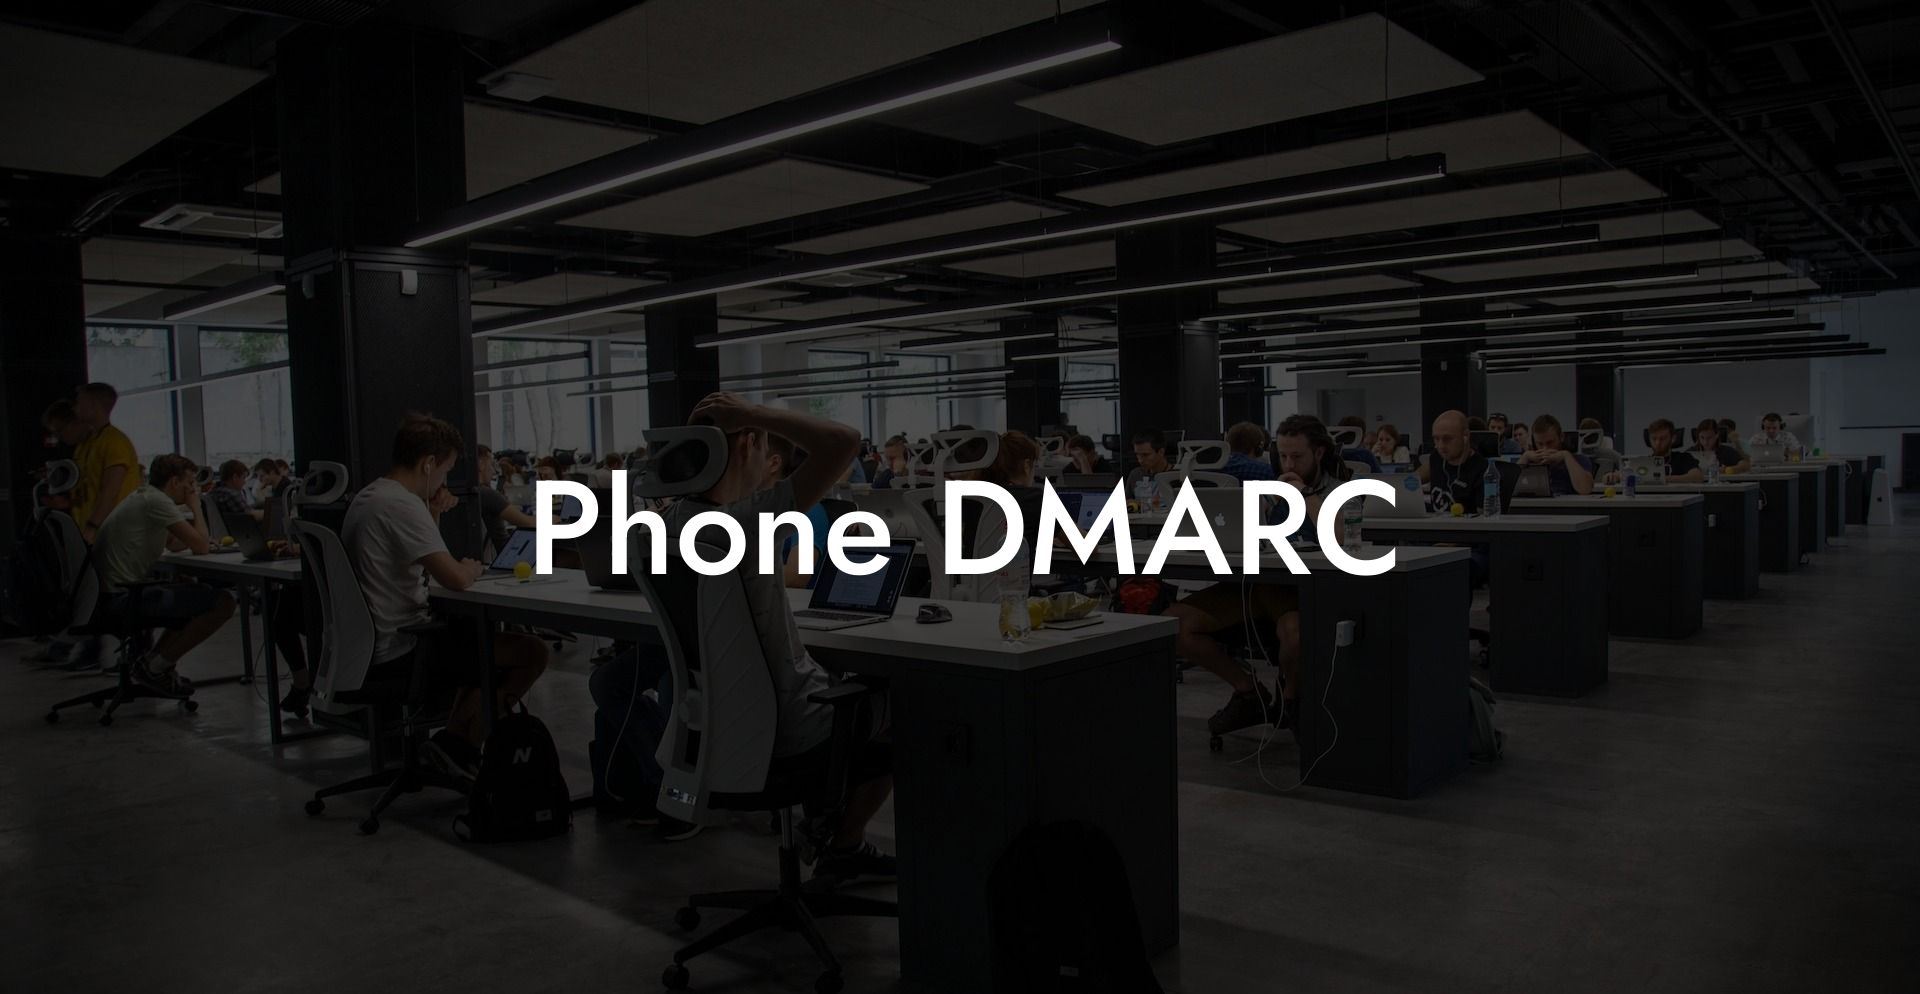 Phone DMARC